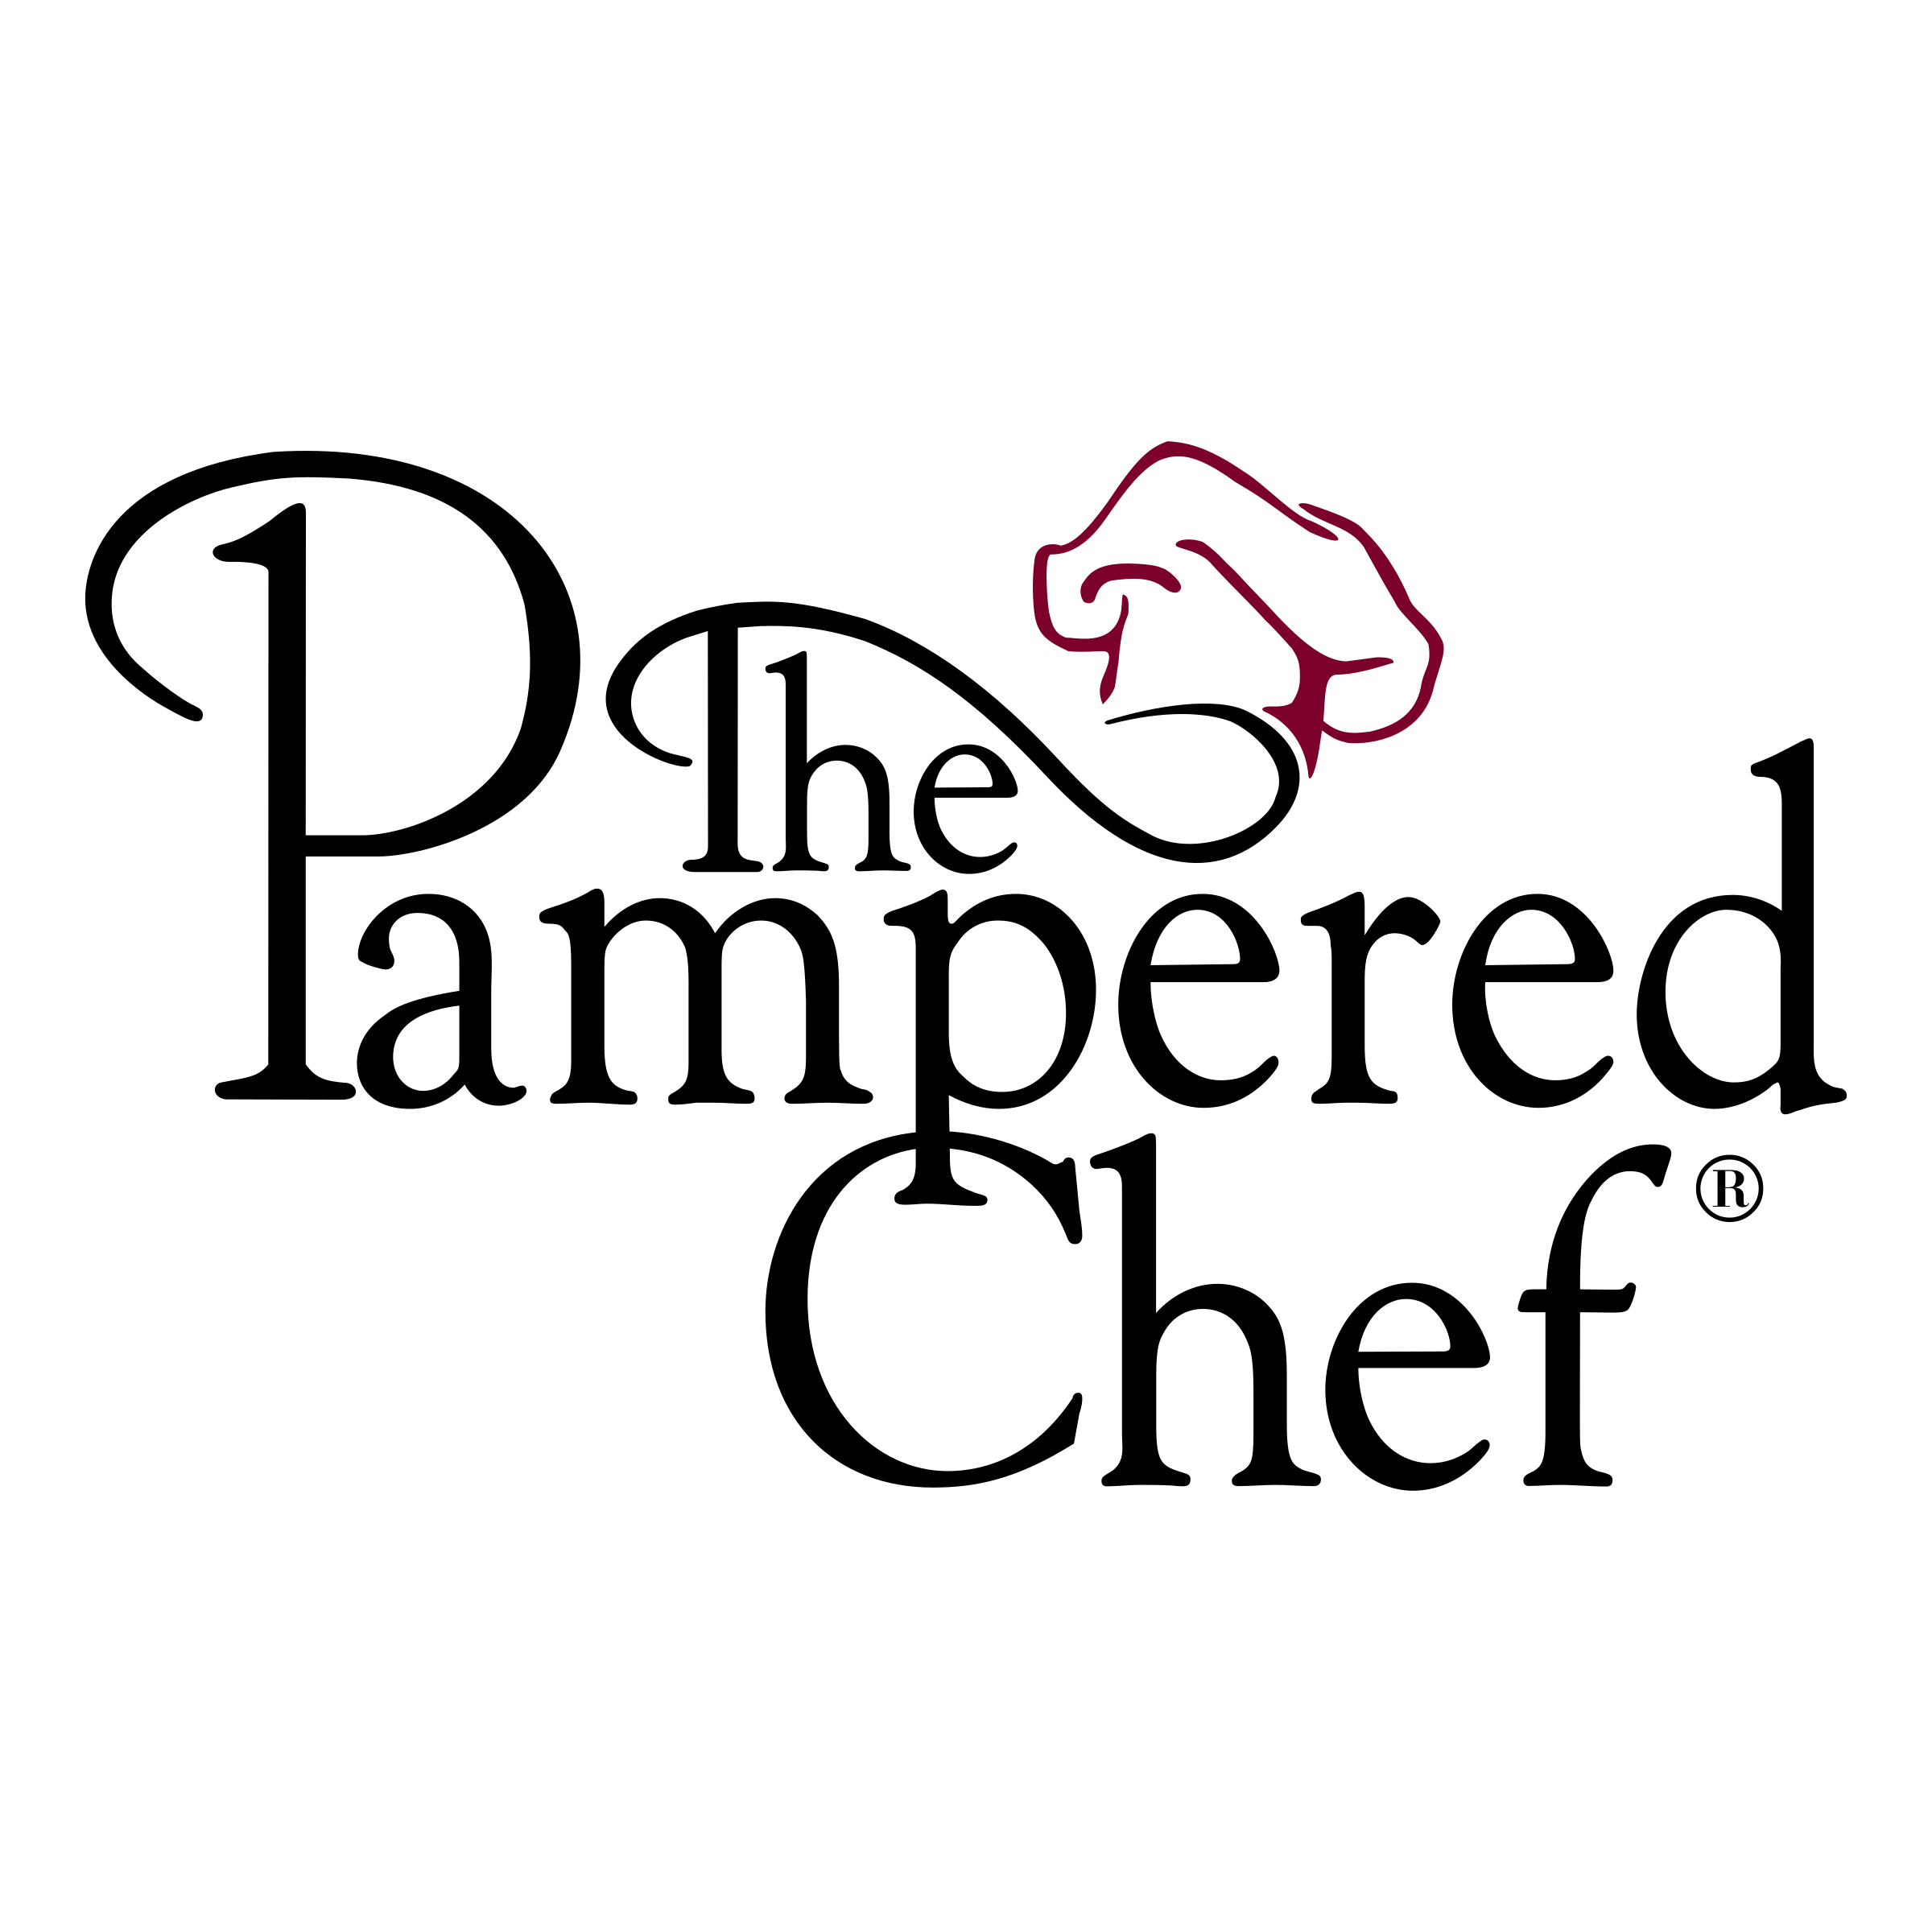 Pampered Chef Logo - The Pampered Chef Logo PNG Transparent & SVG Vector - Freebie Supply